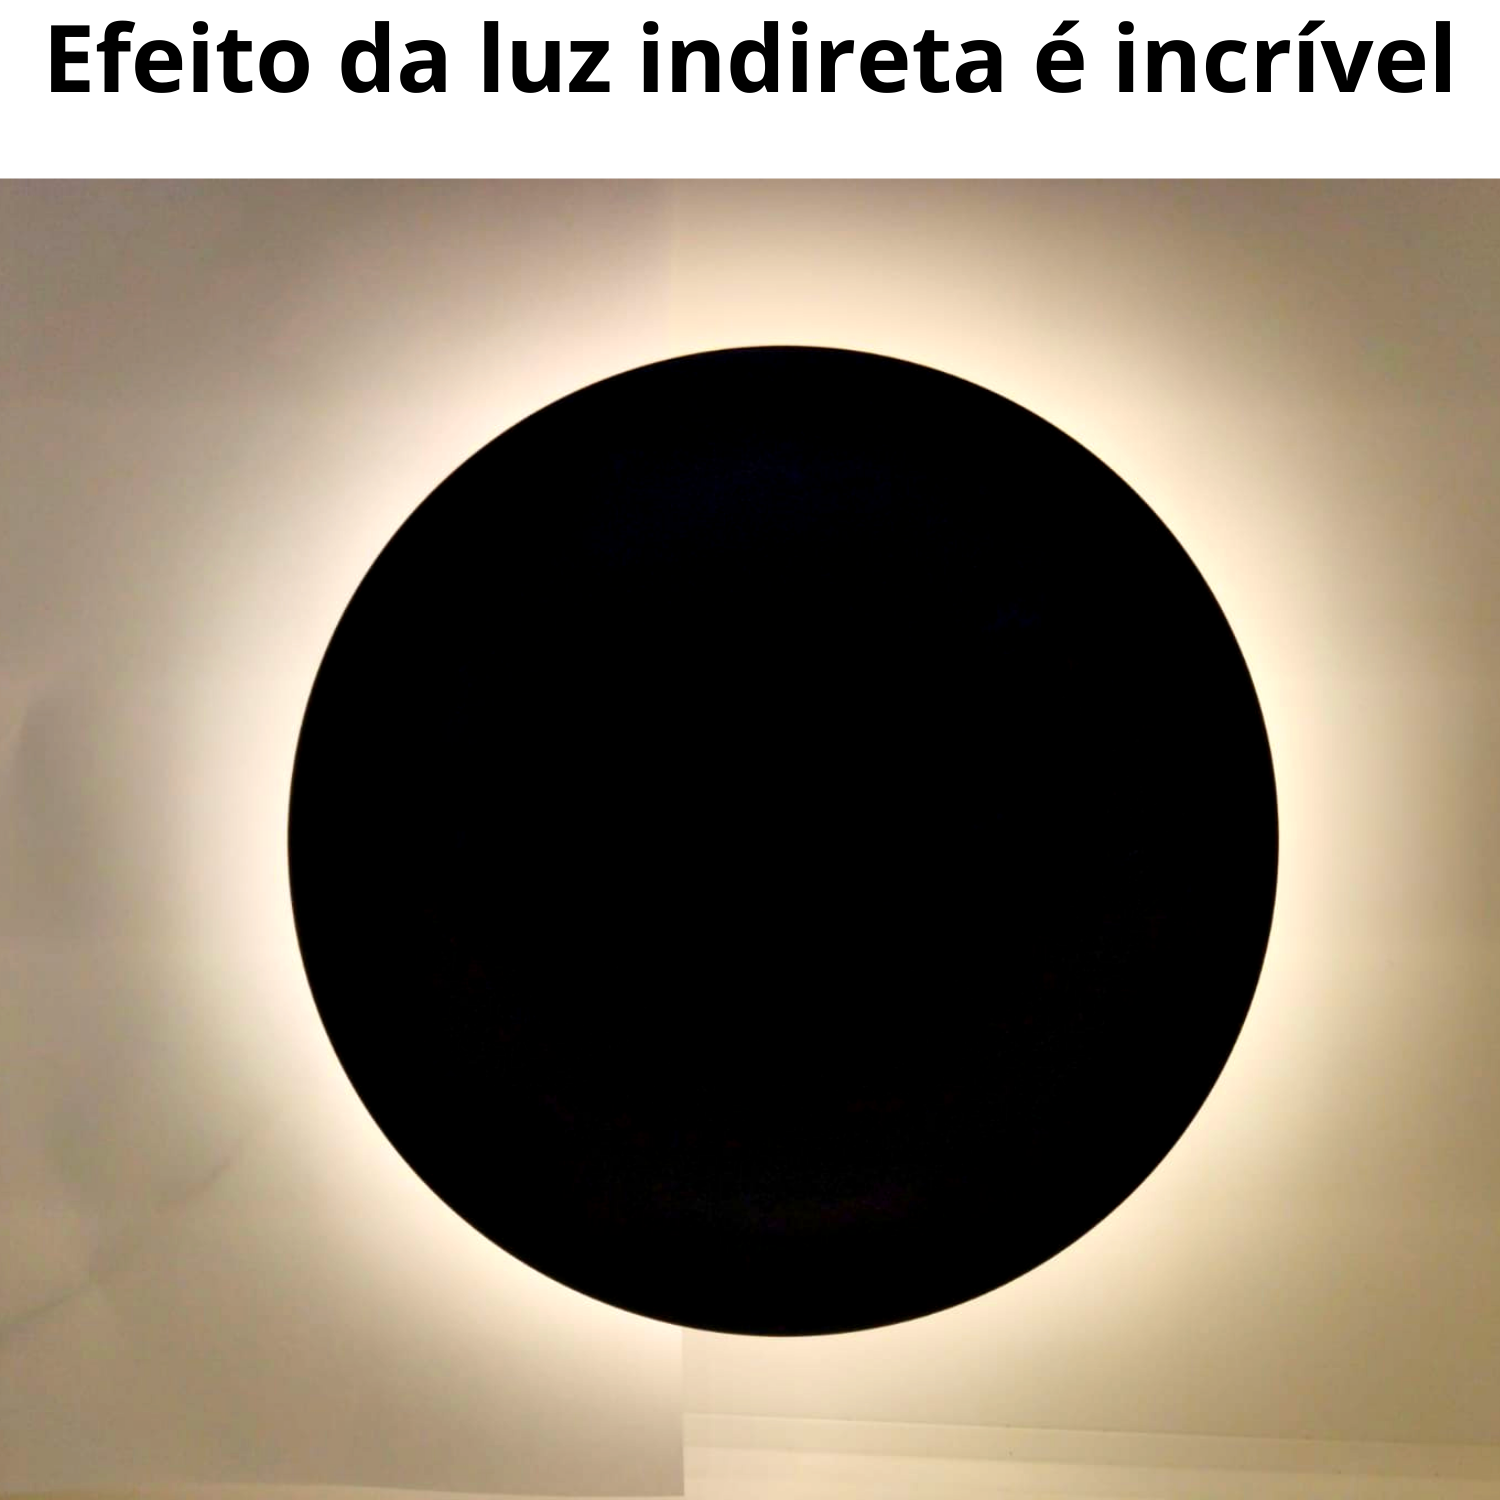 Arandela Eclipse 12W 3000K A prova de agua luz indireta LED: Preto - 10